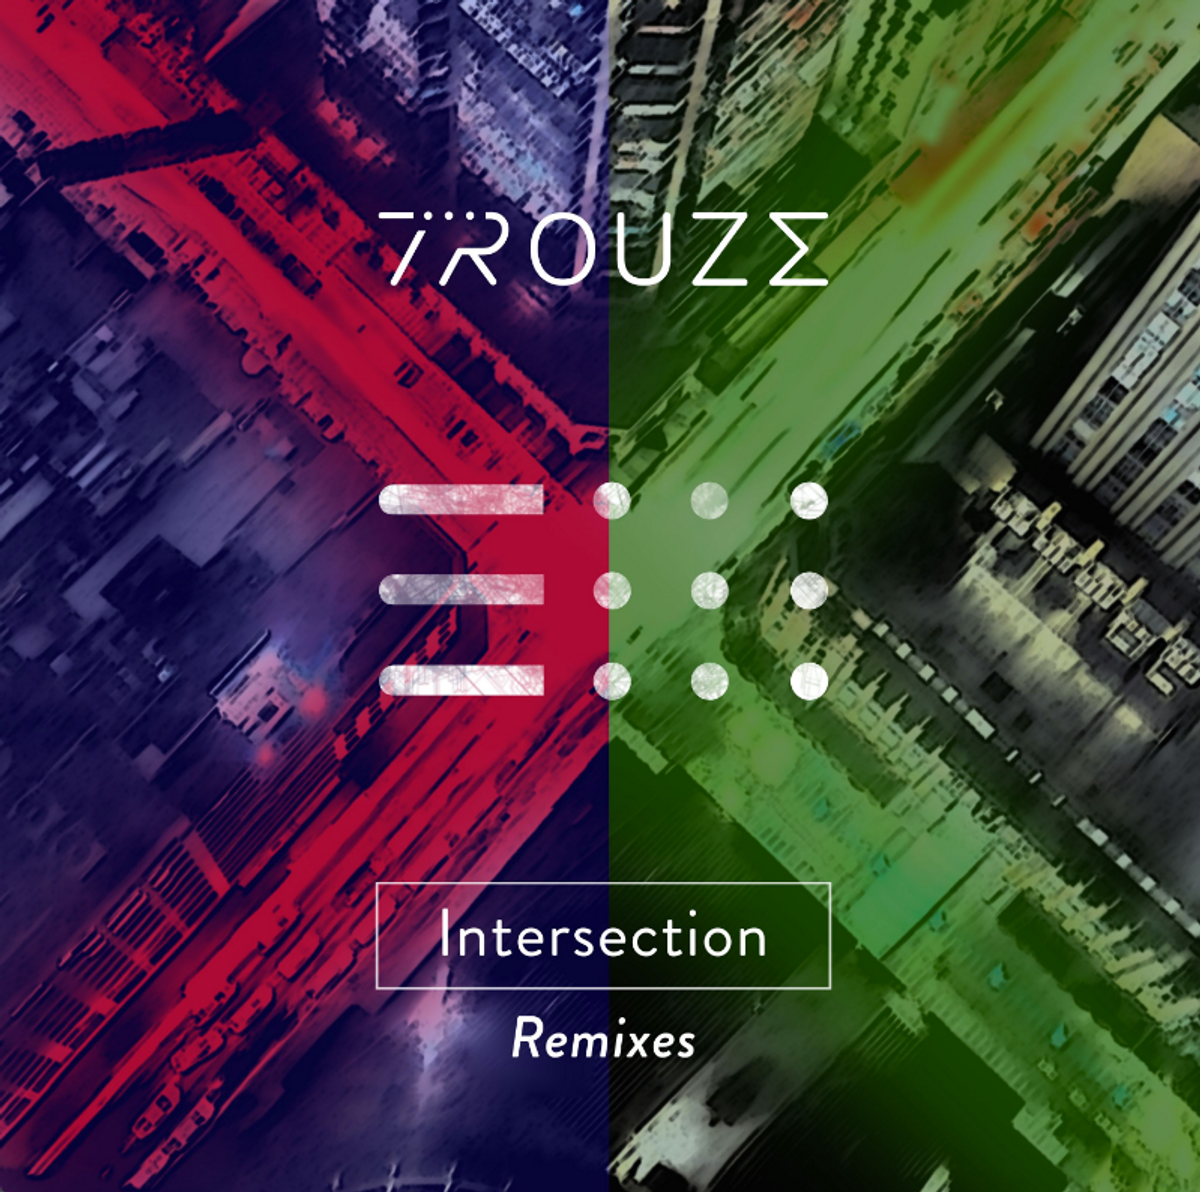 Project 46, Gazzo, and Kodrin Remix Trouze's "Intersection"